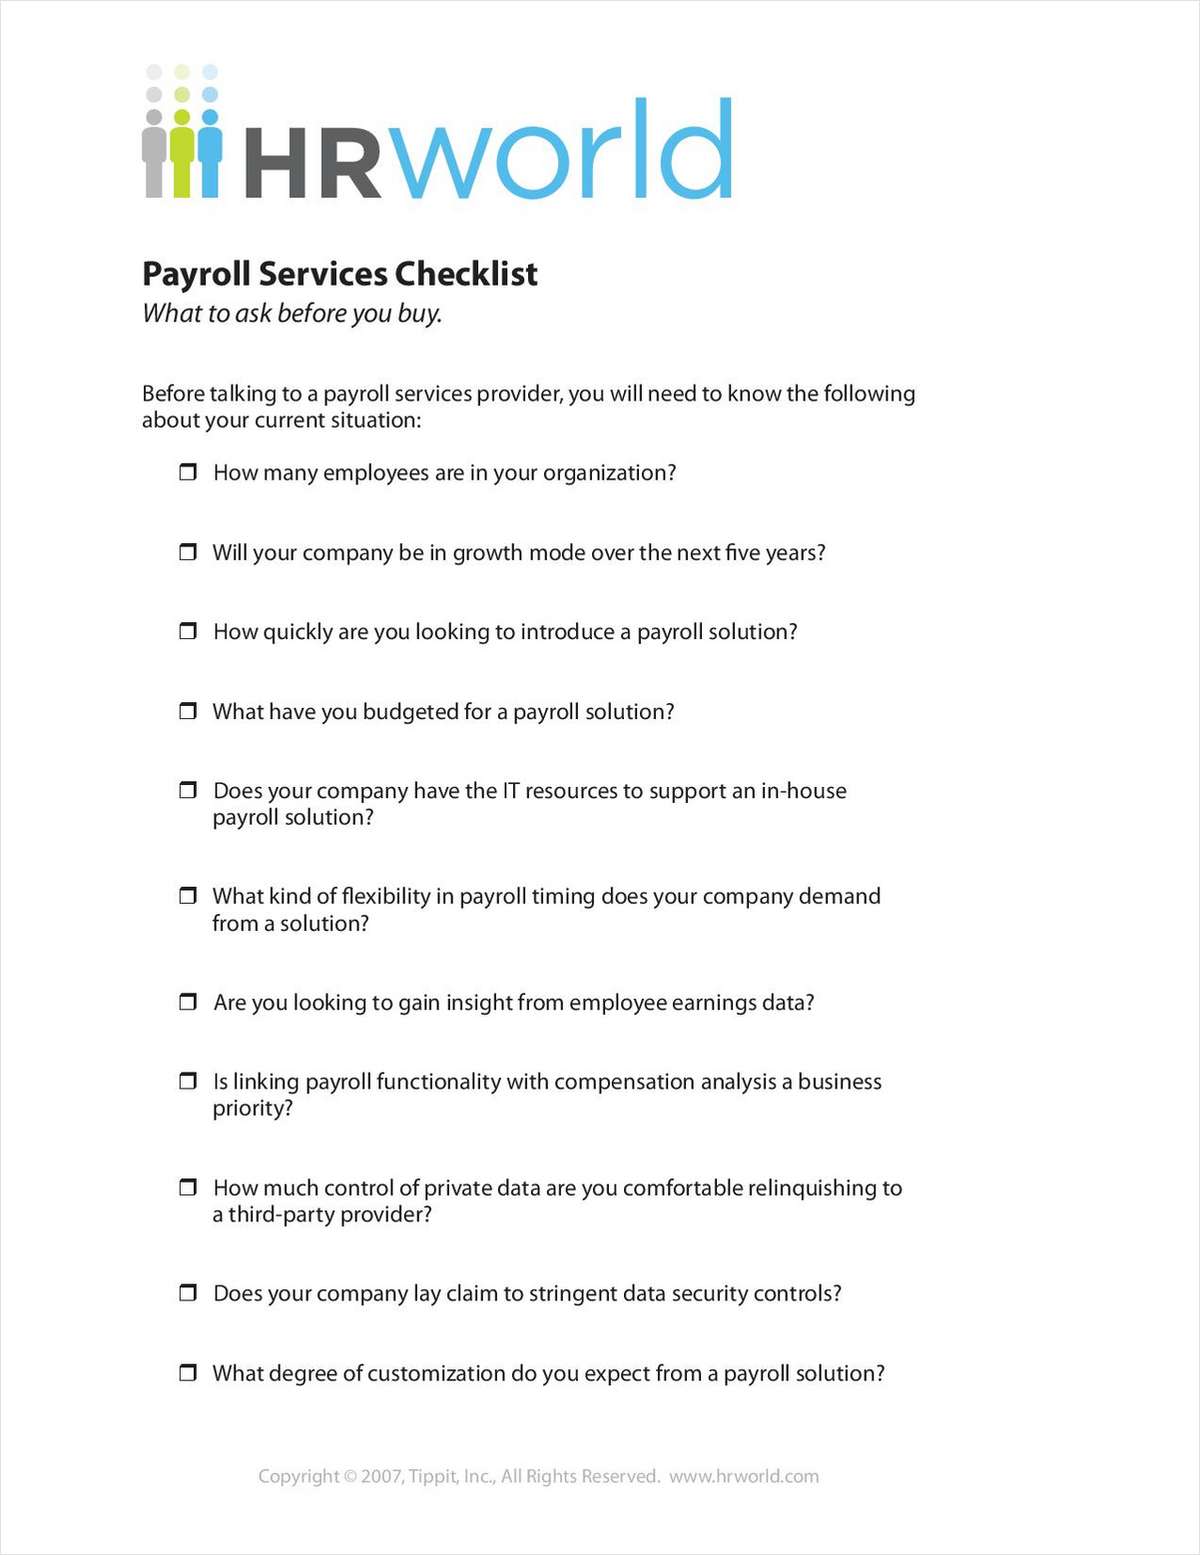 The HR World Payroll Services Checklist